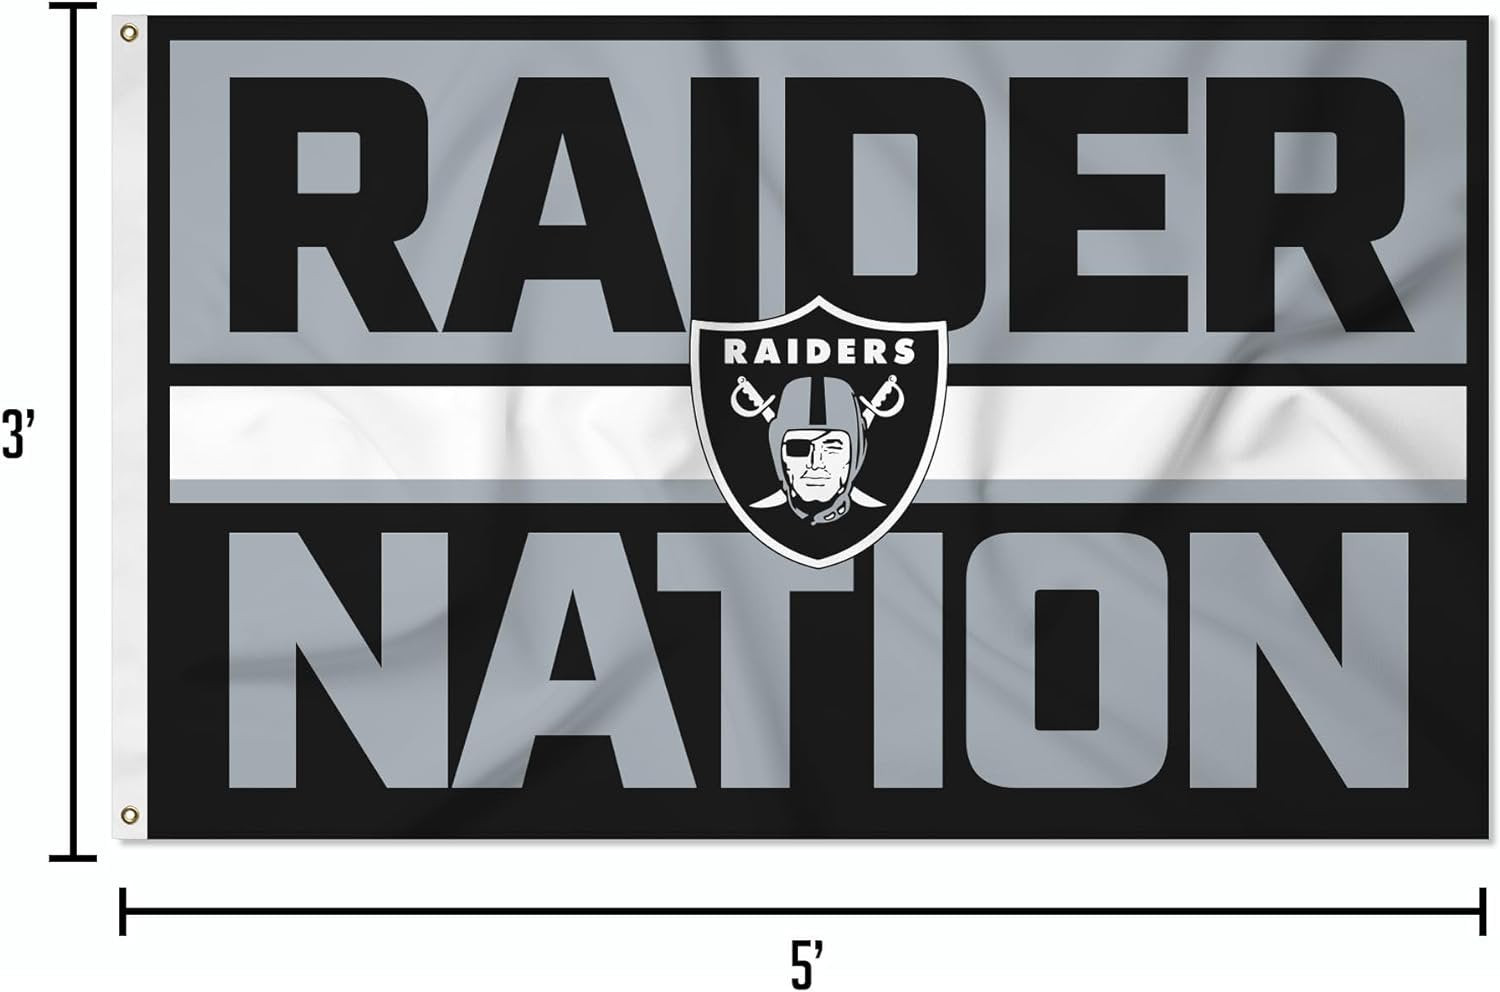 Las Vegas Raiders Premium 3x5 Foot Flag Banner, Bold Design, Metal Grommets, Outdoor Indoor Use, Single Sided